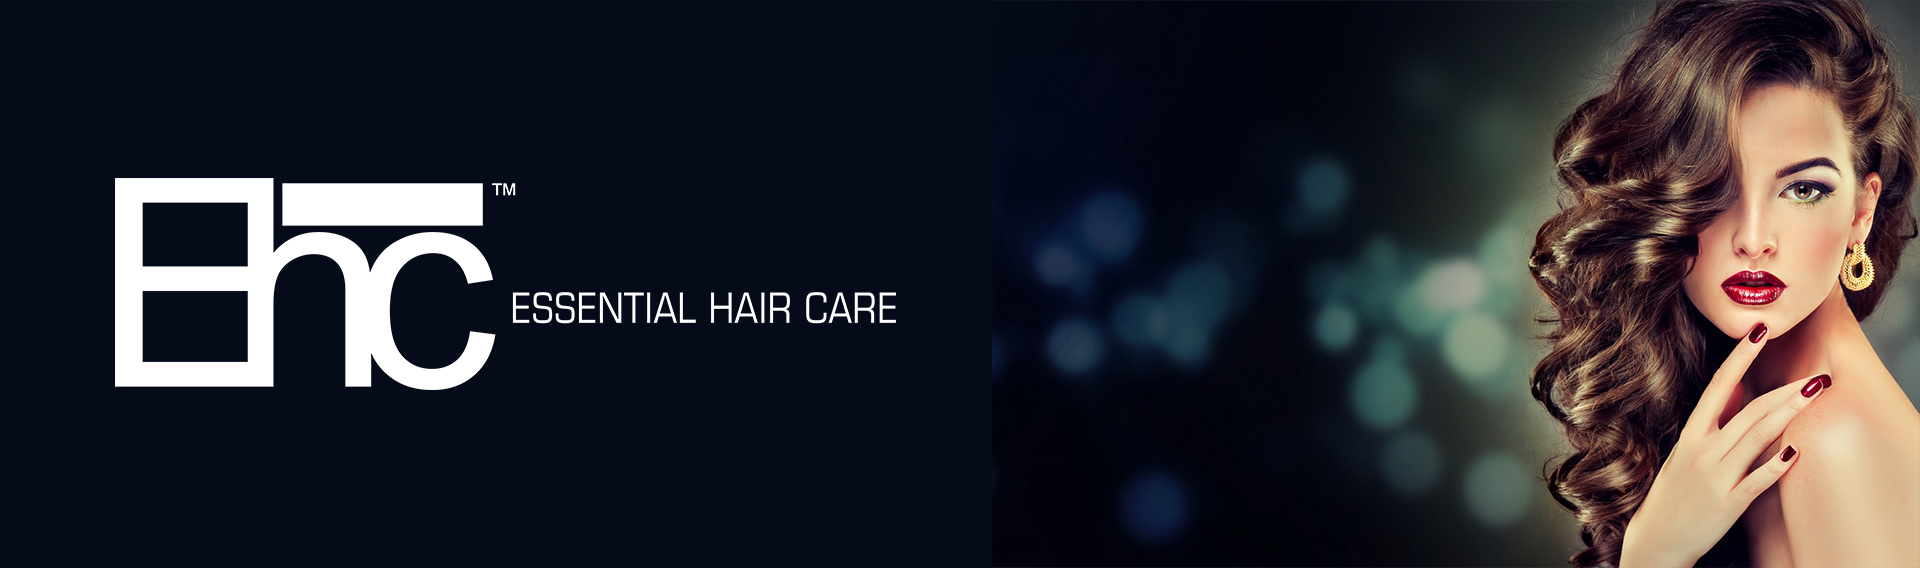 Essential Hair Care